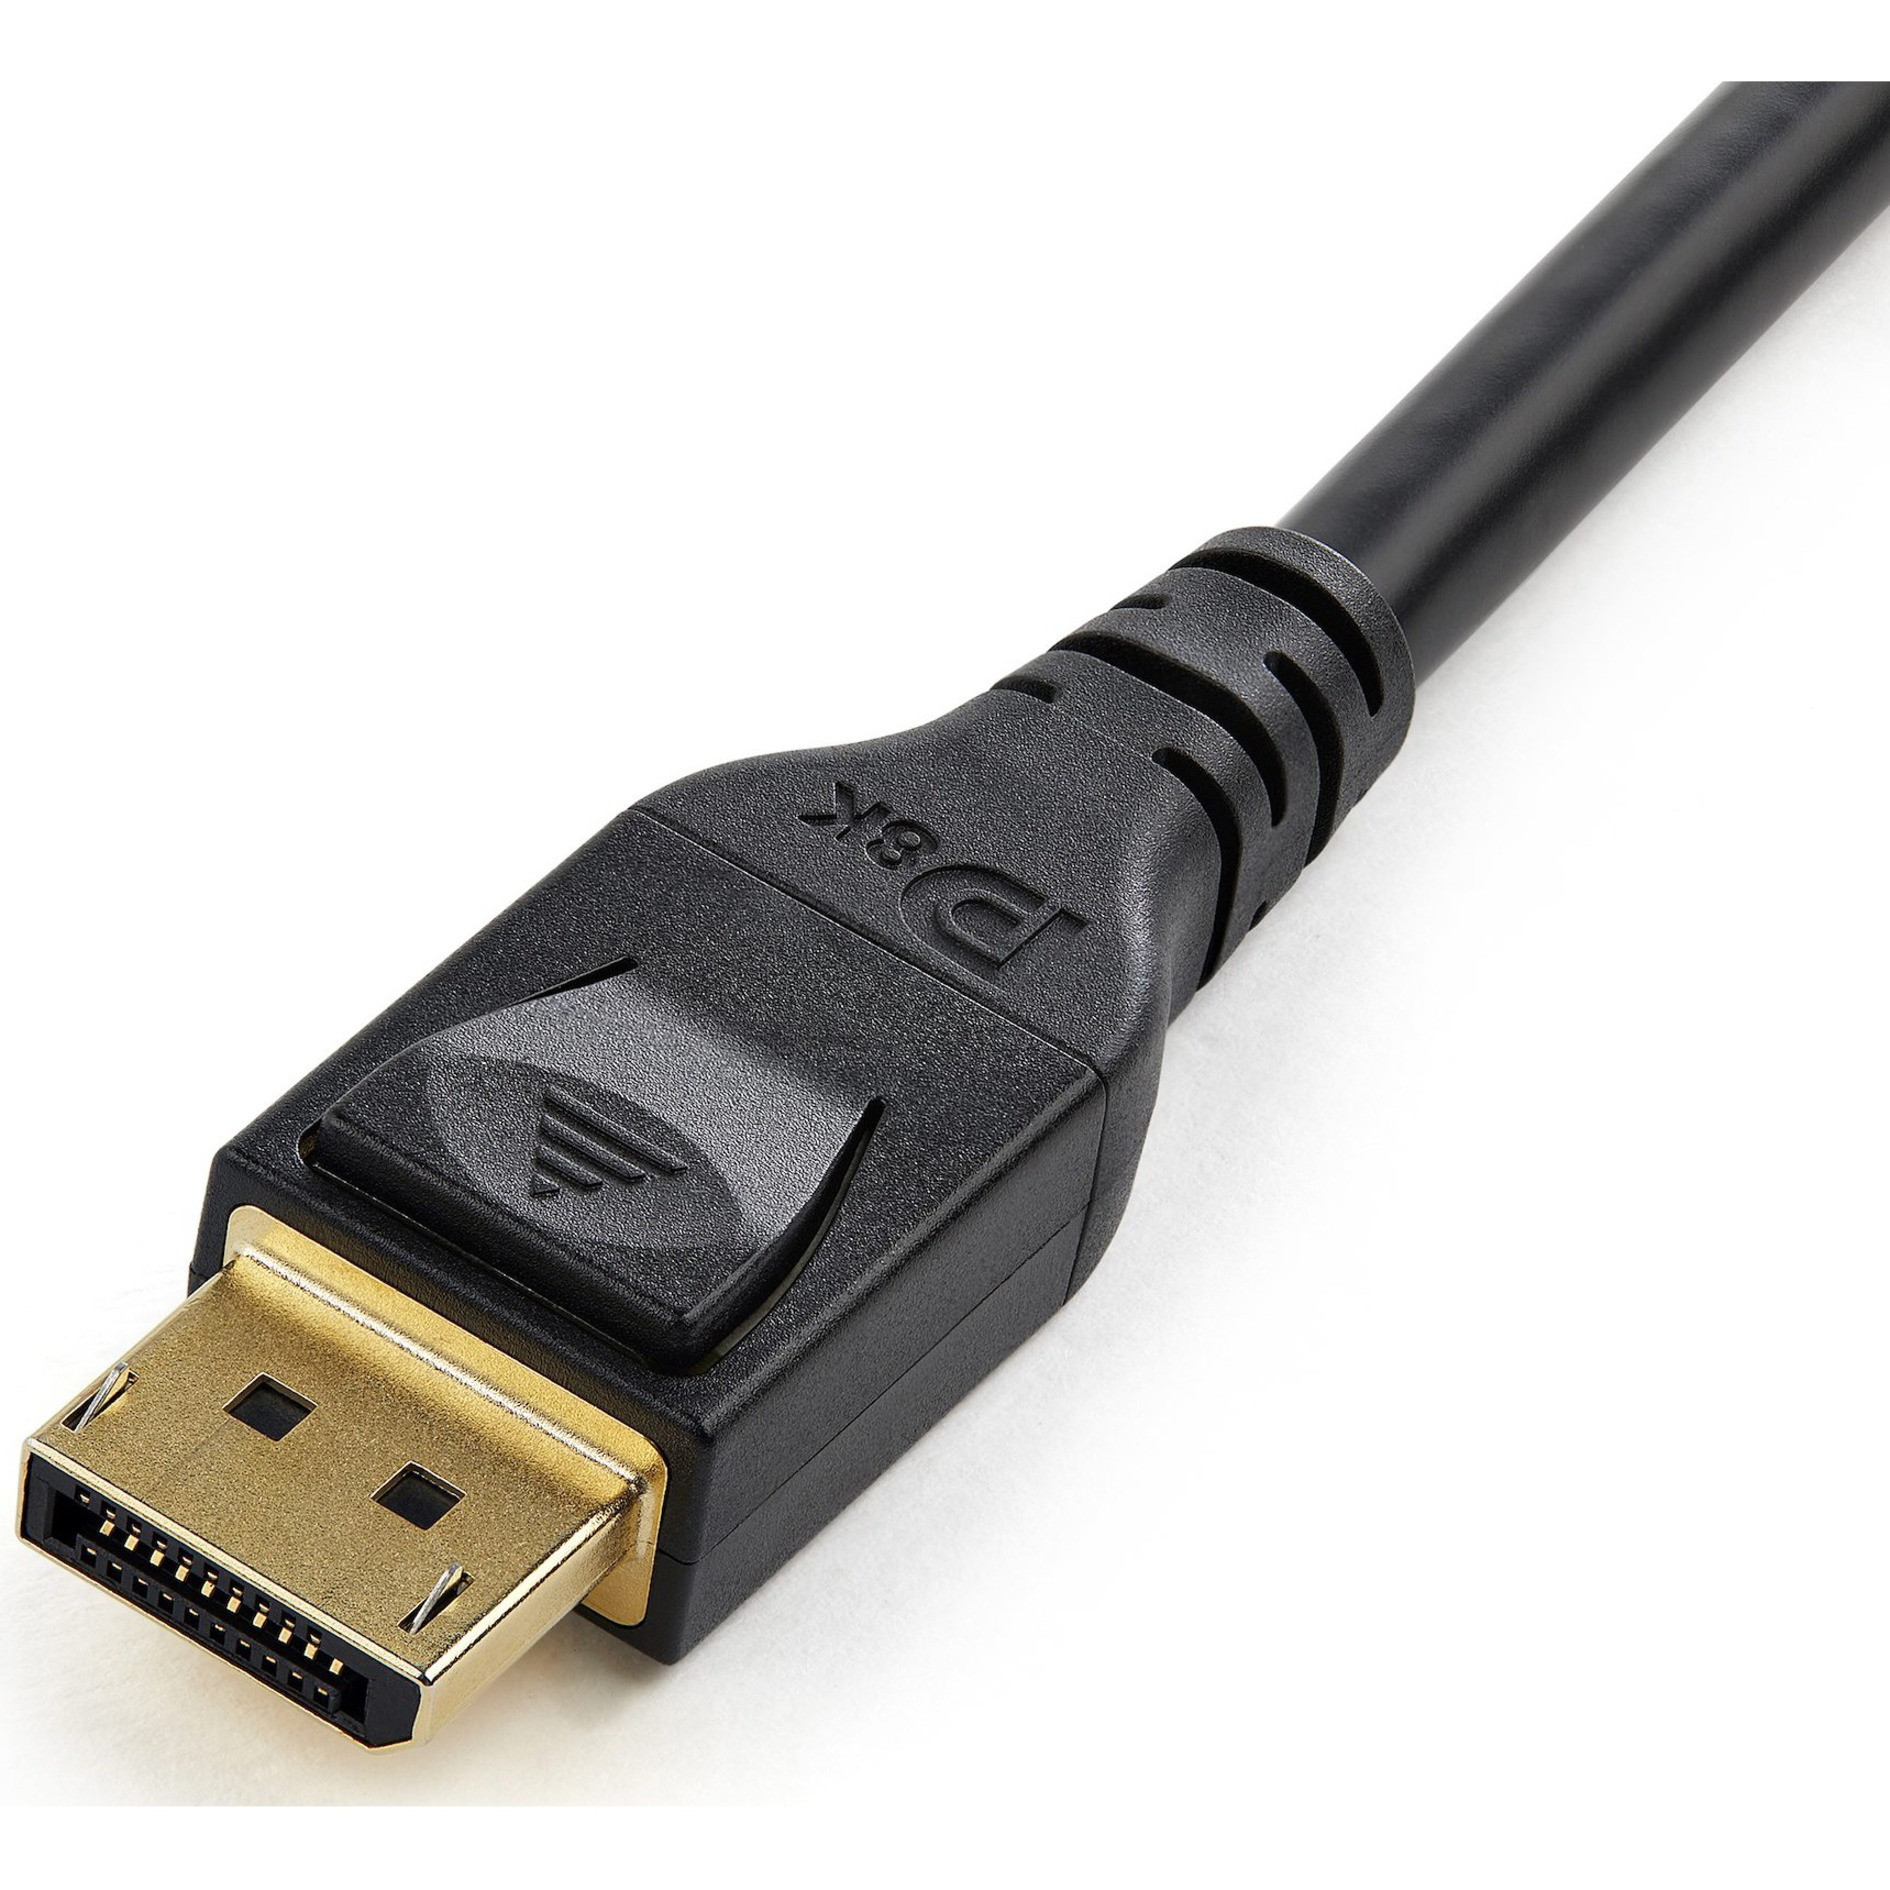 Cable MCL DisplayPort 1.4 (3 m) - DisplayPort - LDLC